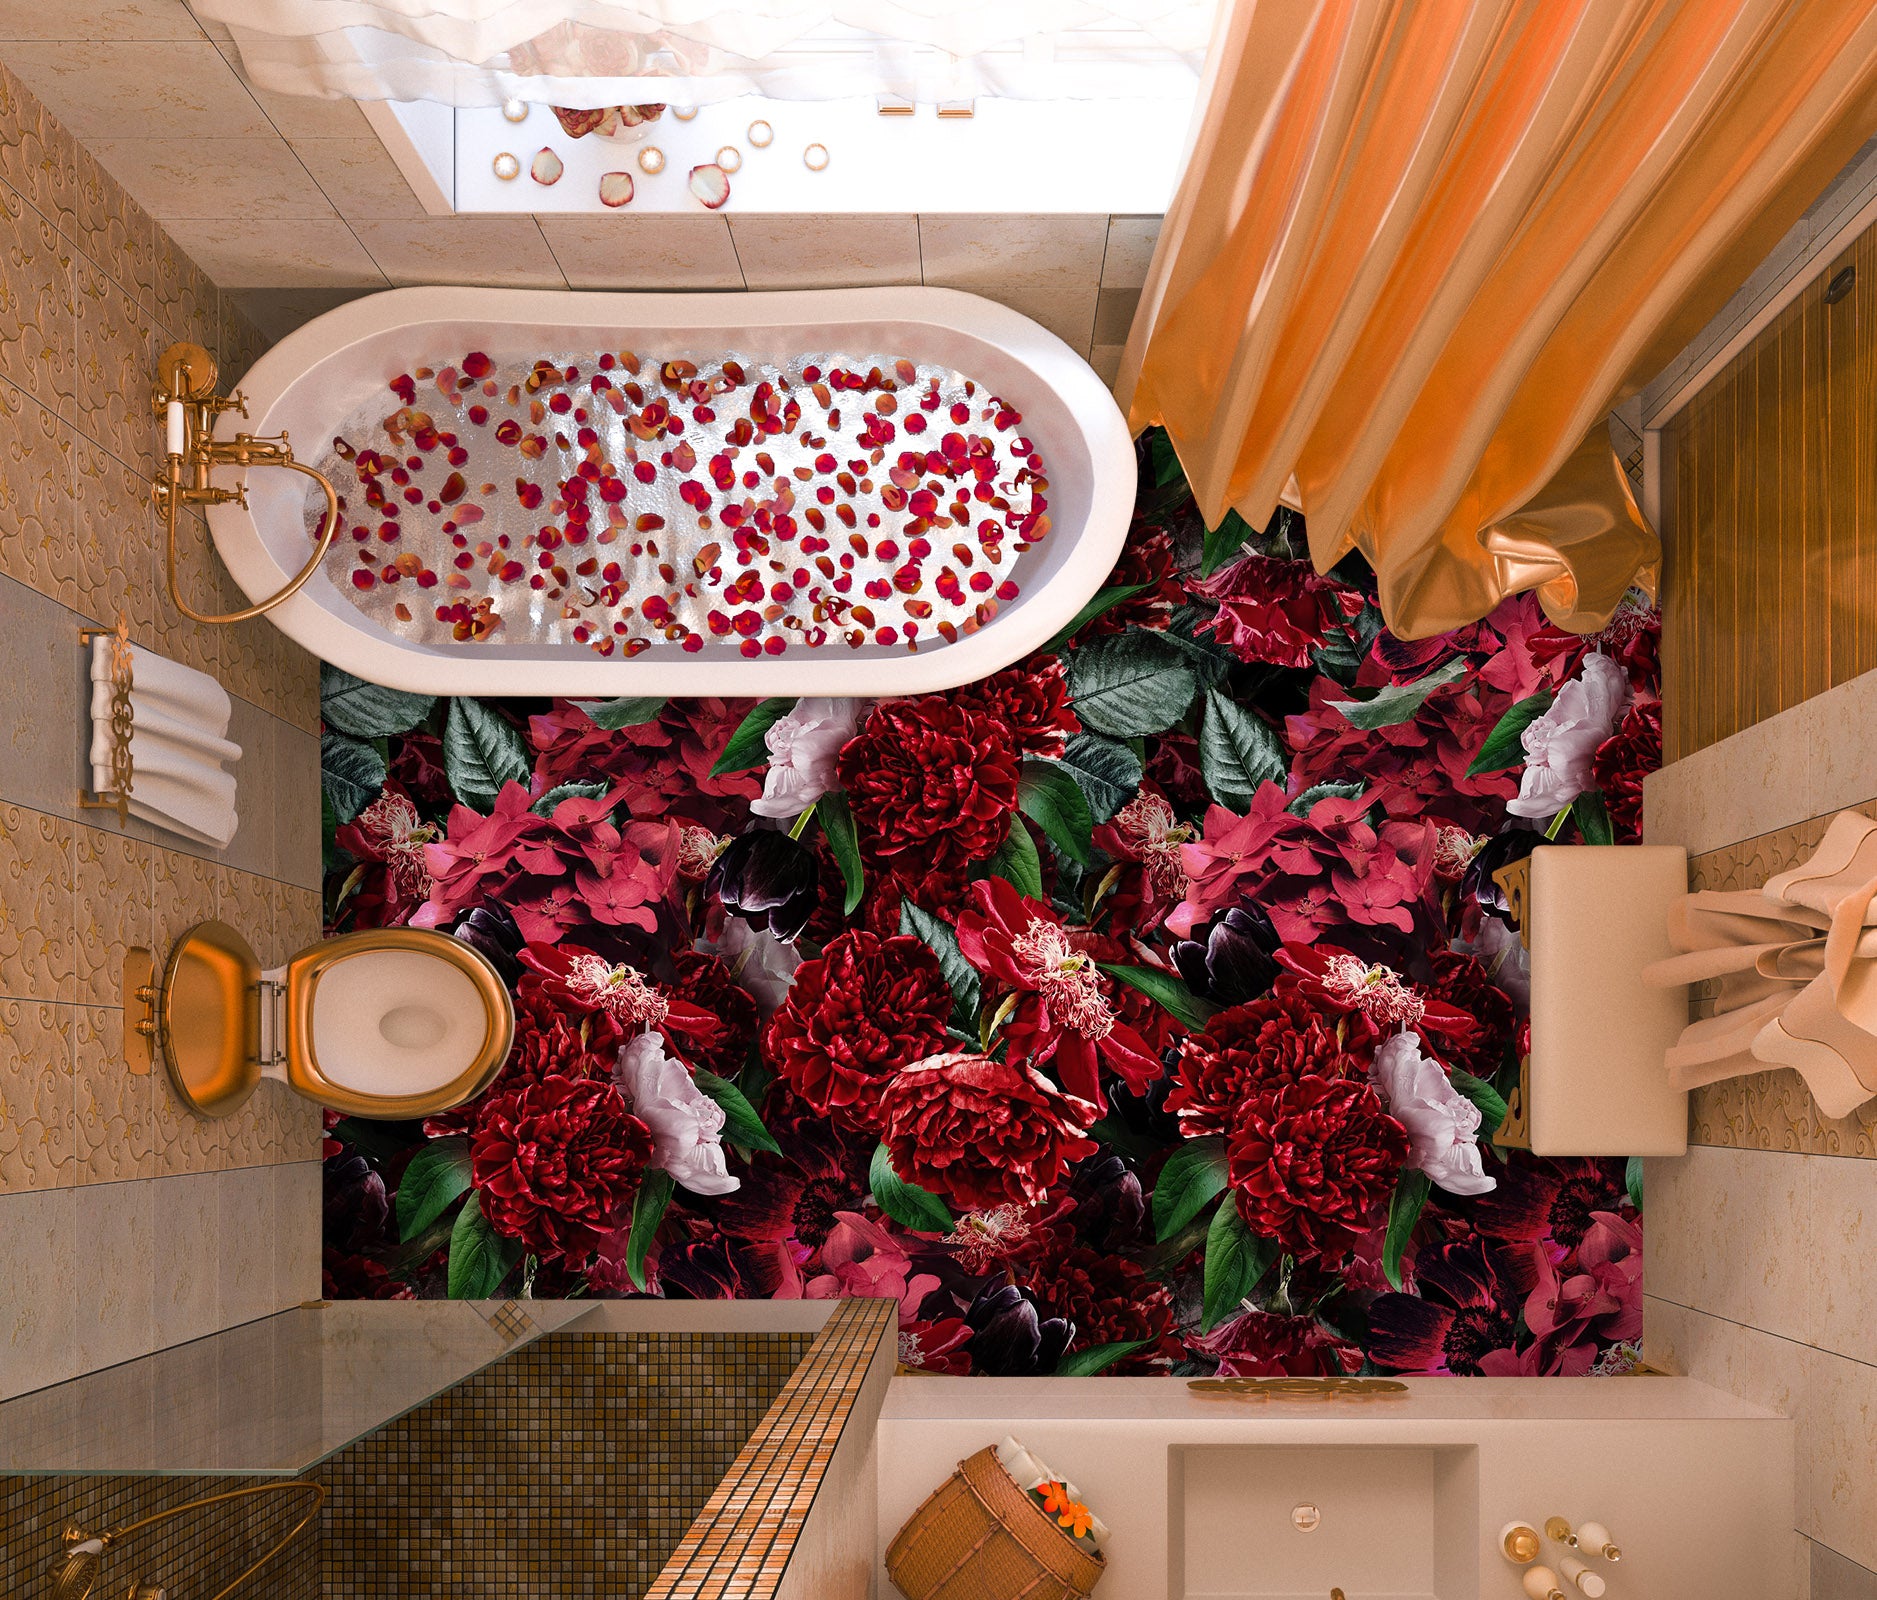 3D Flowers Red Clump 99227 Uta Naumann Floor Mural  Wallpaper Murals Self-Adhesive Removable Print Epoxy